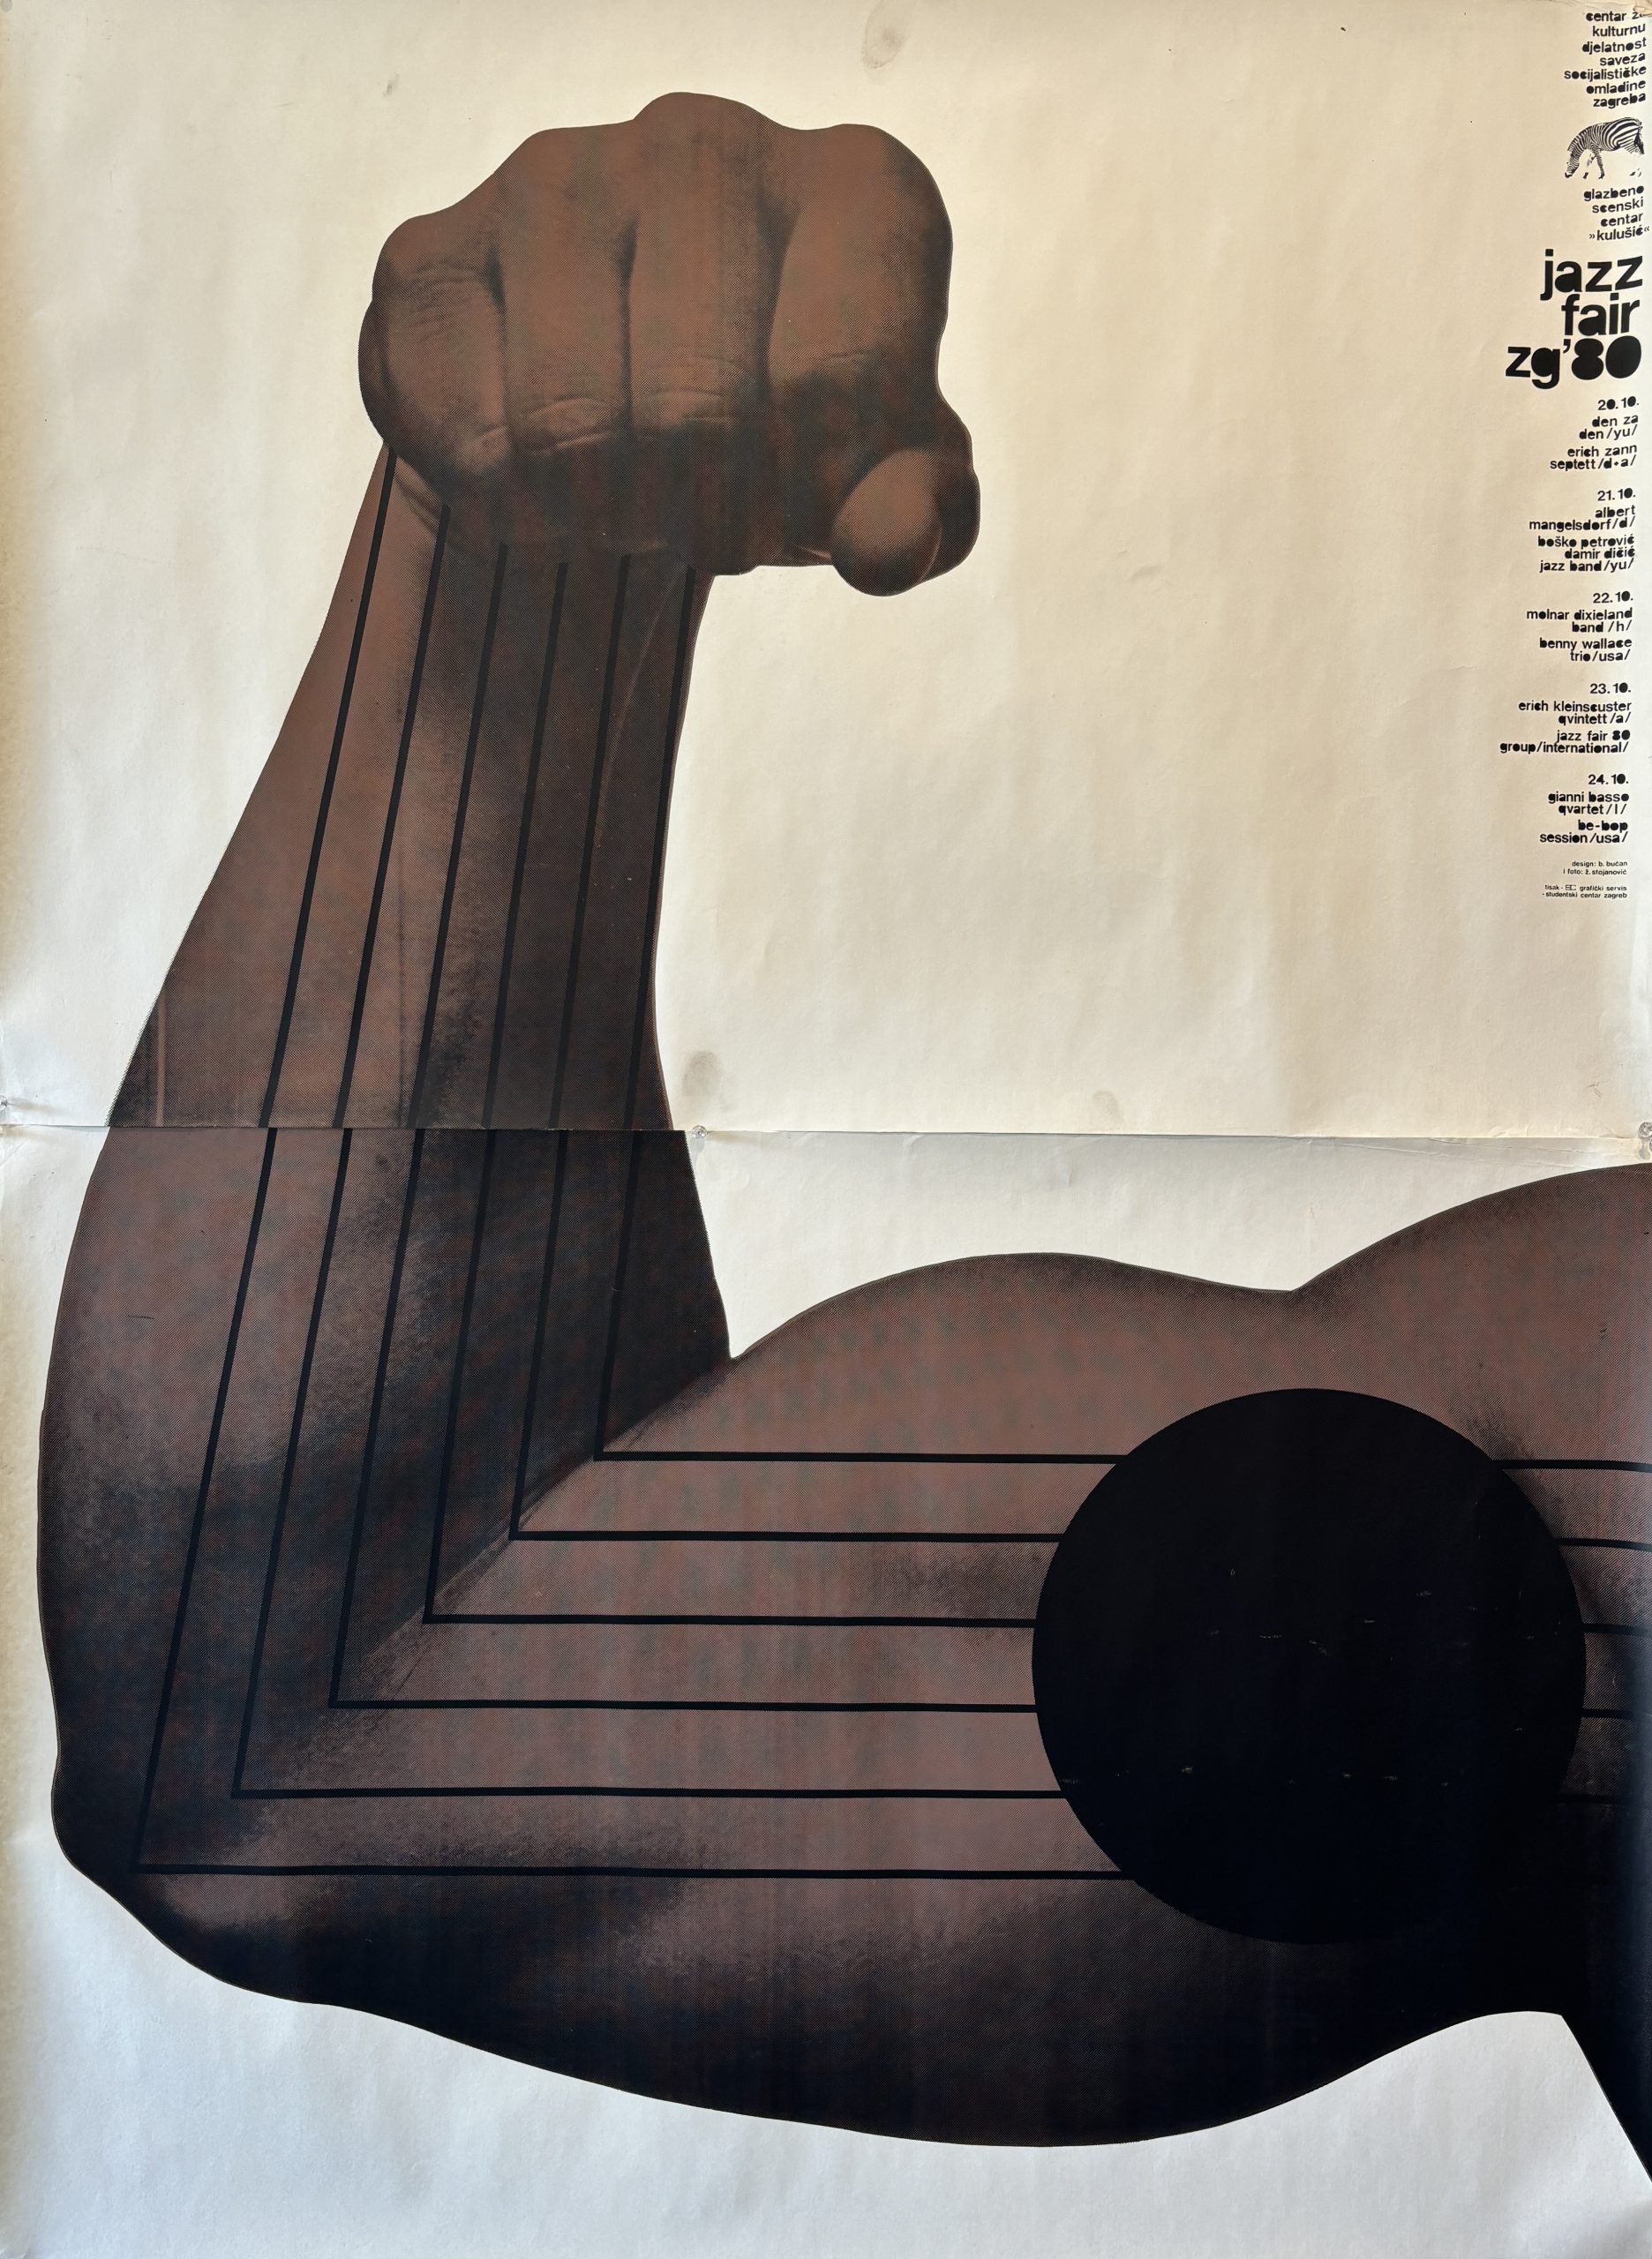 Boris Bucan Jazz Fair 1980 Original Vintage Poster